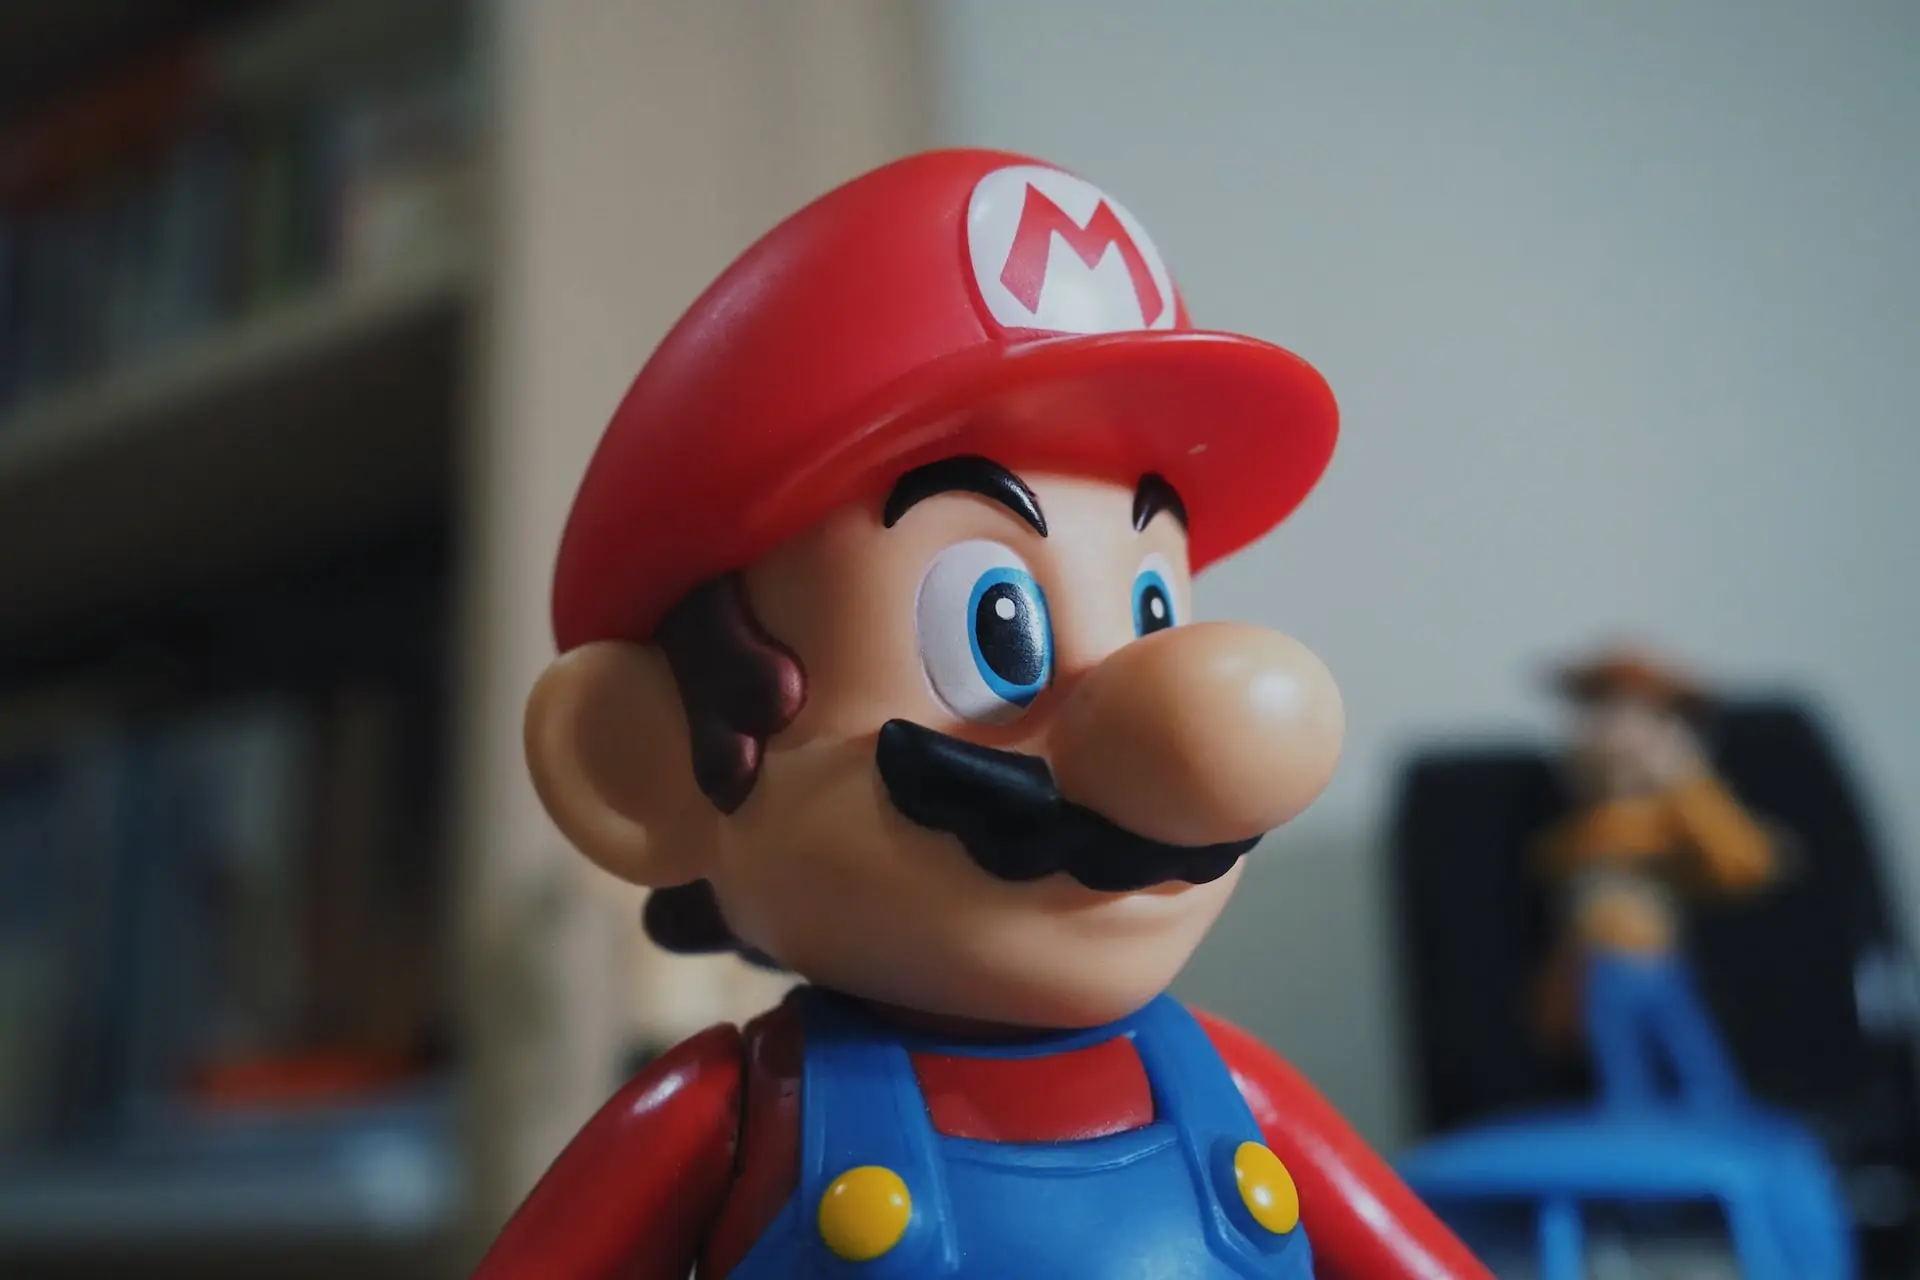 A Game Dev’s Retrospective on Super Mario Bros